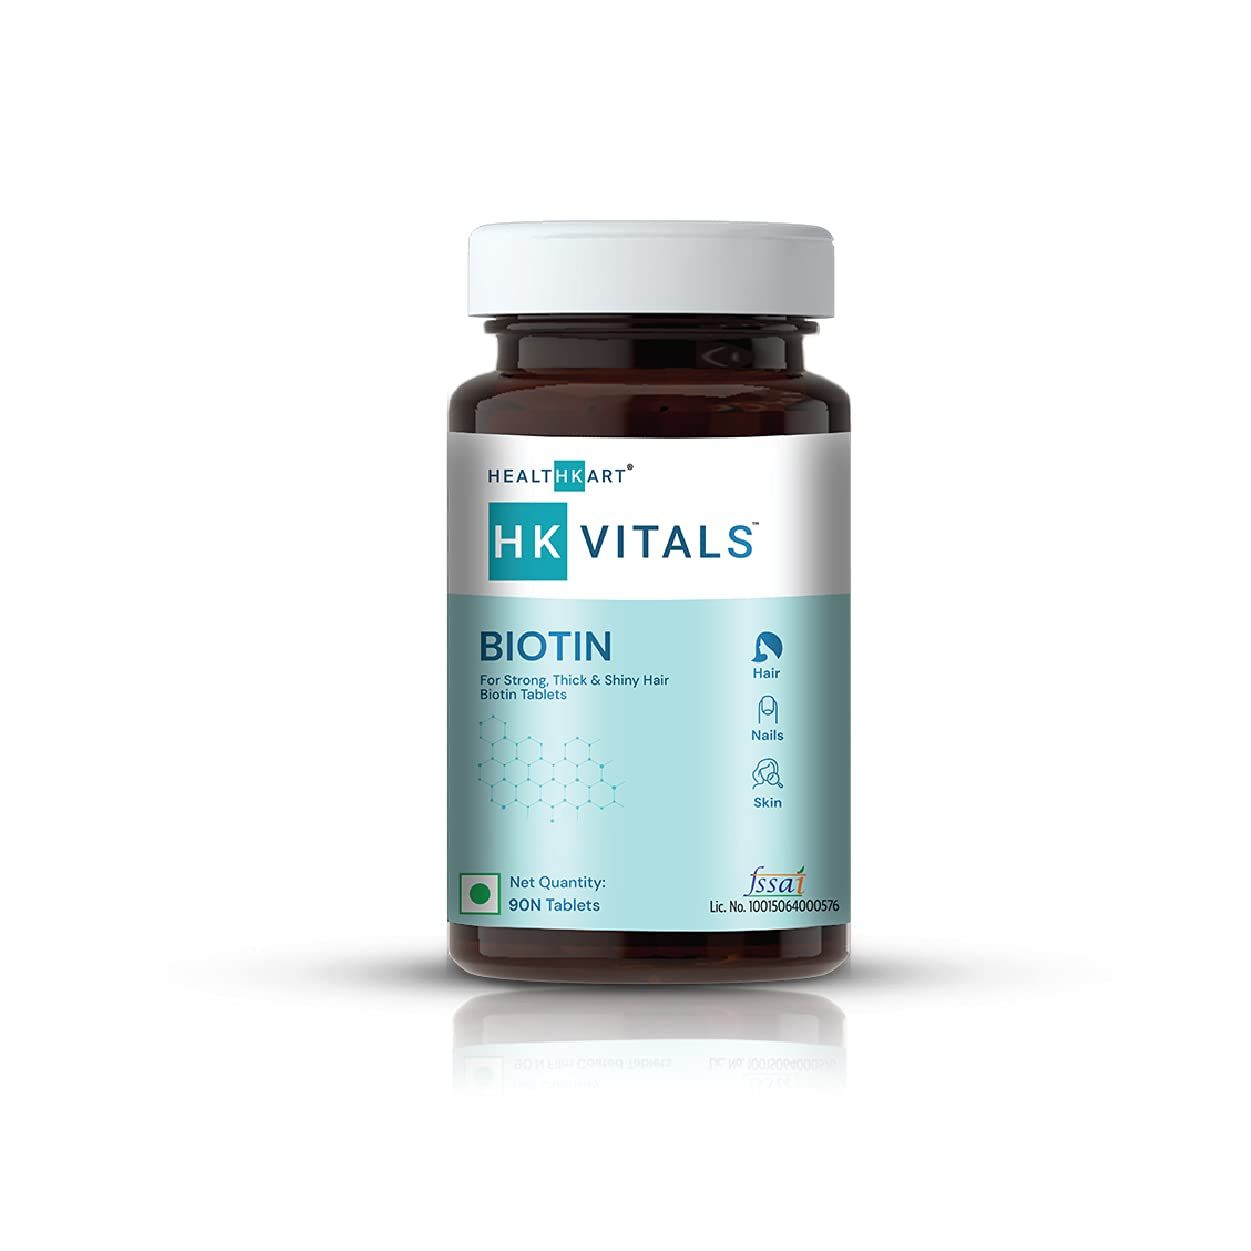 HK Vitals Biotin Supplement Image